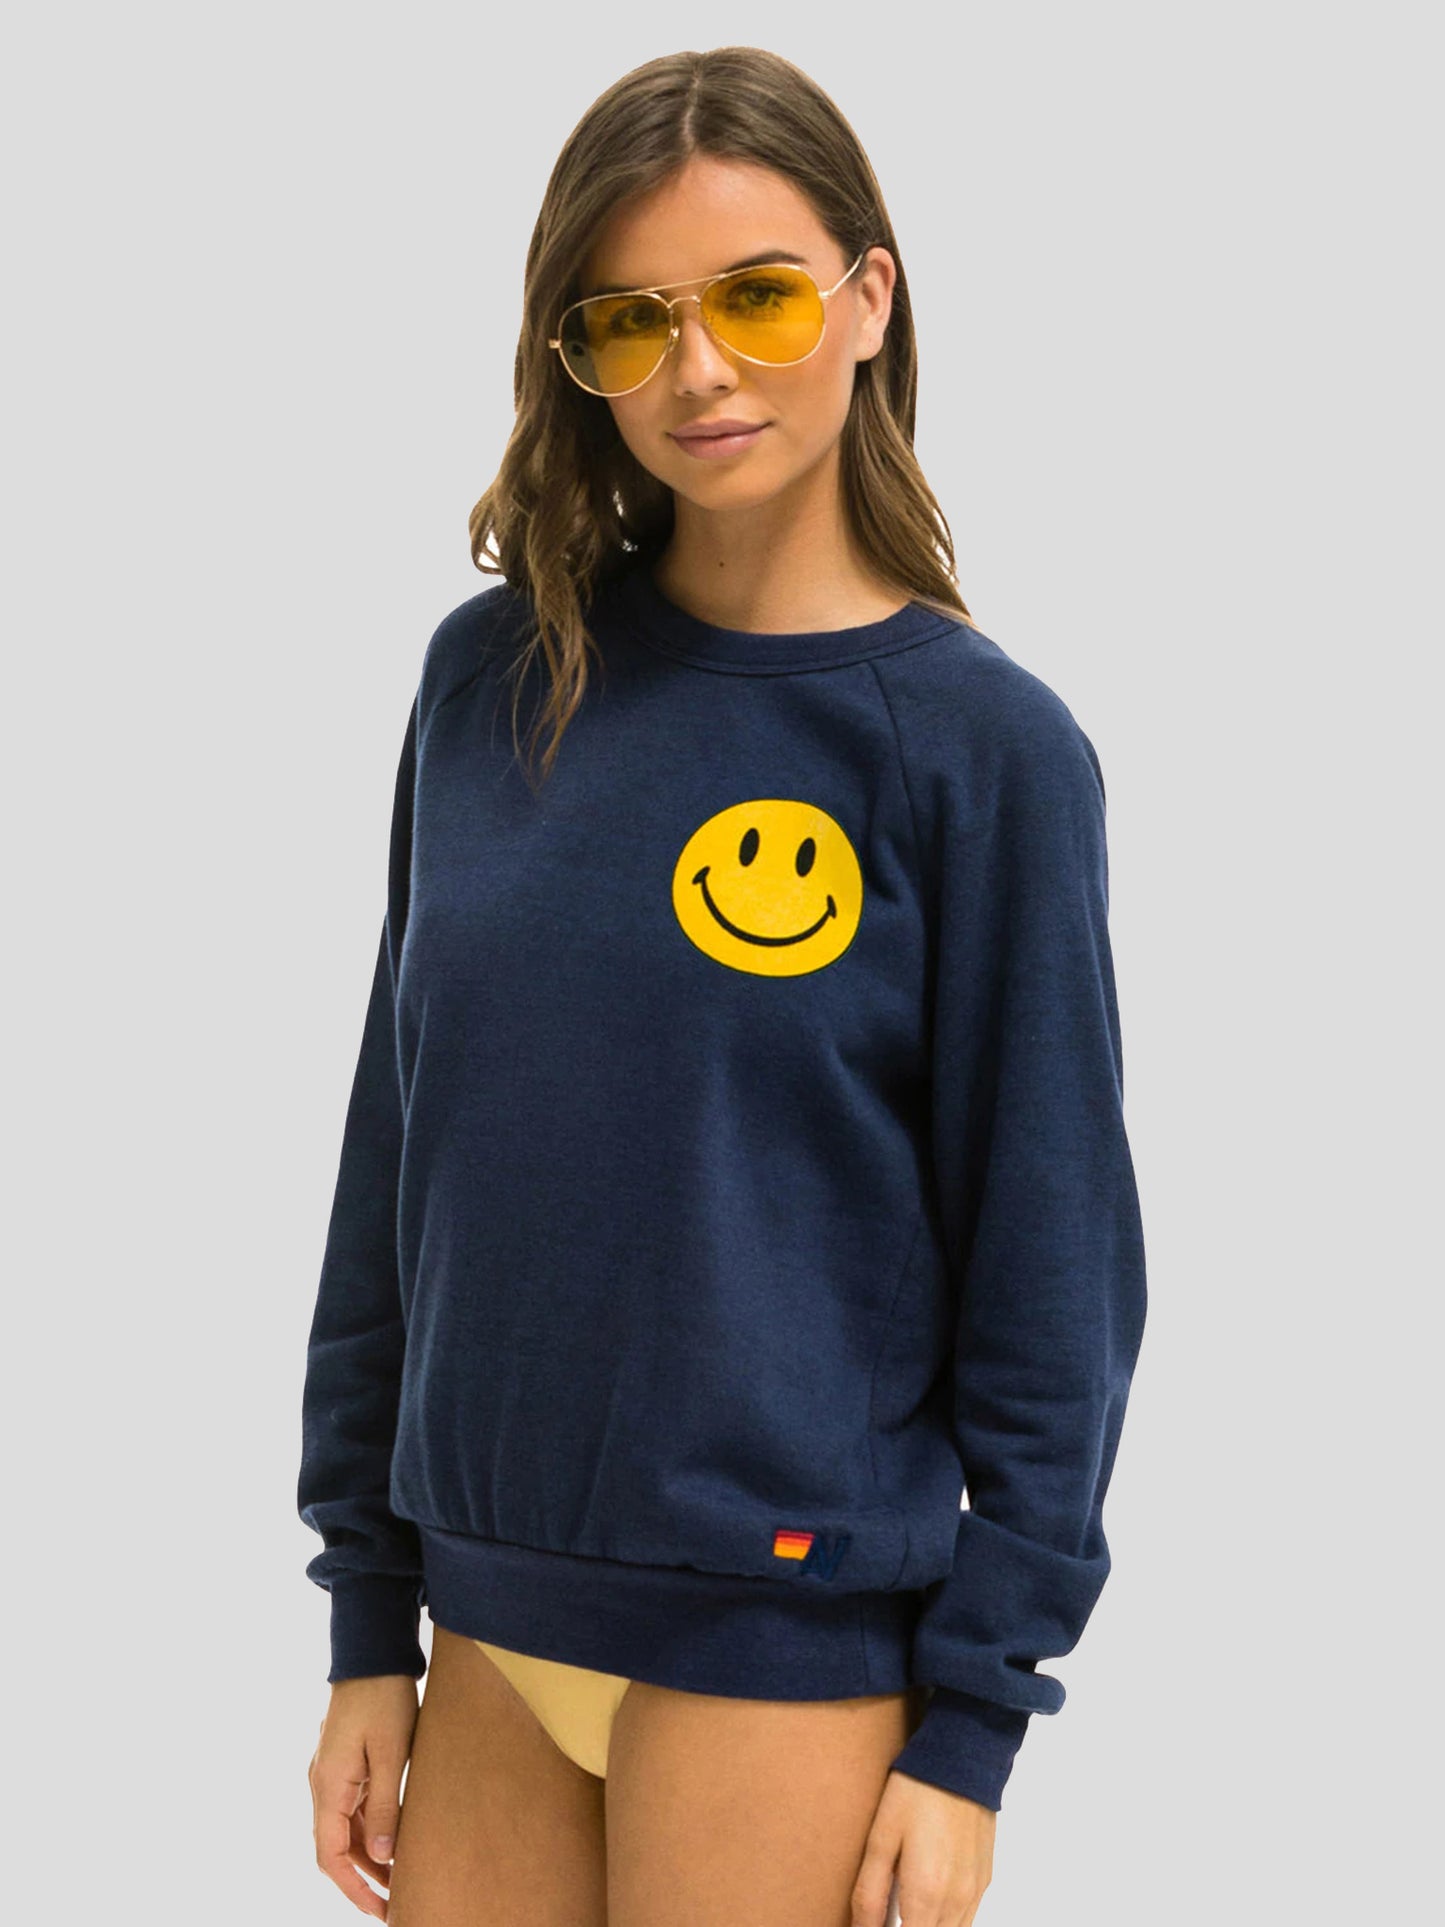 Aviator Nation Women's Smiley 2 Sweatshirt